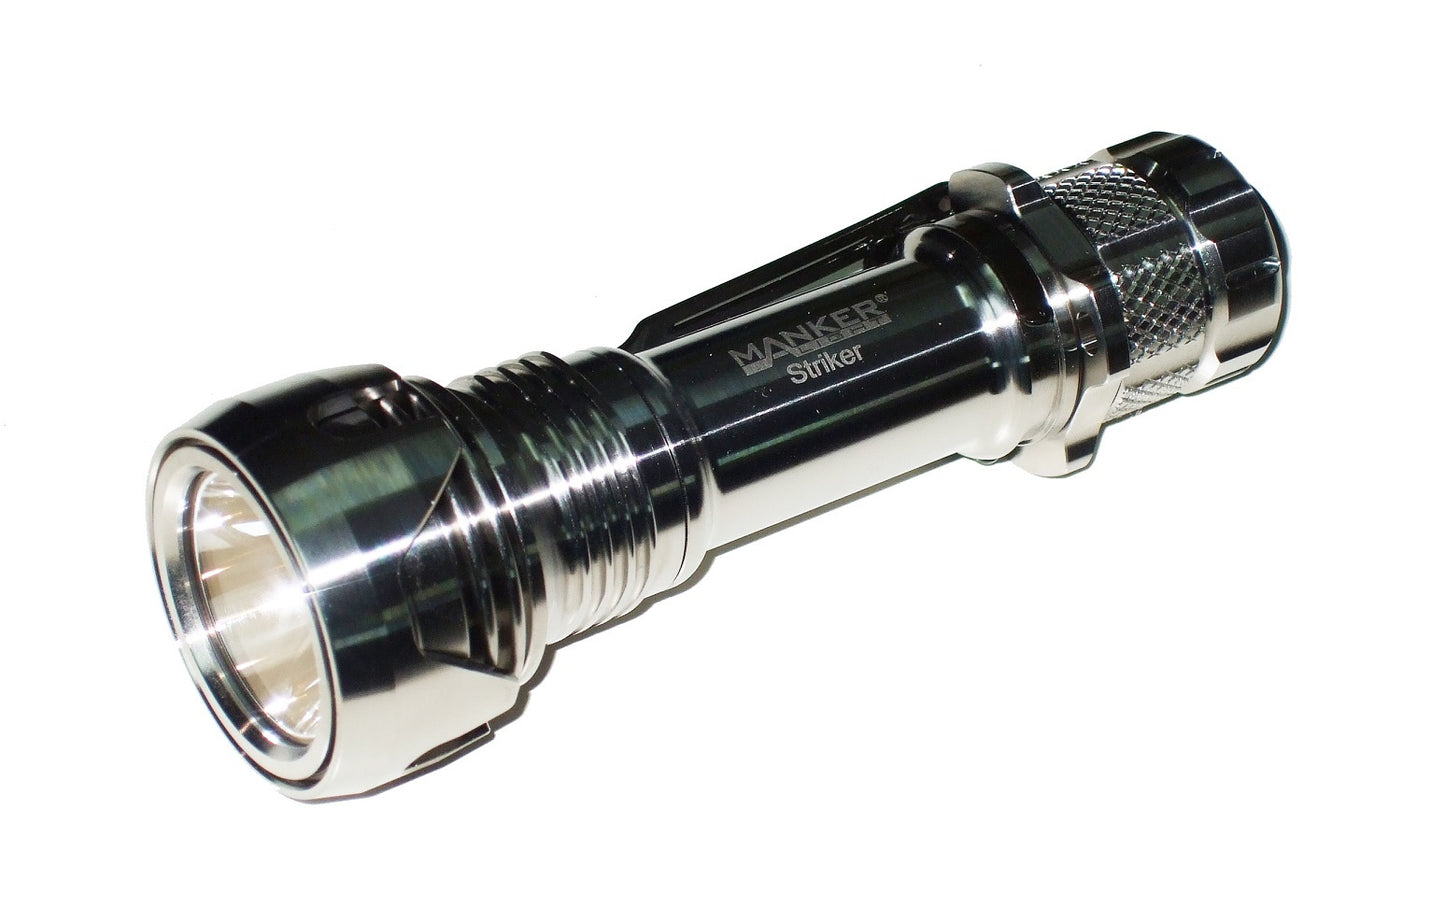 New Manker Striker Titanium ( Natural Color ) USB Charge 2300 Lumens Flashlight